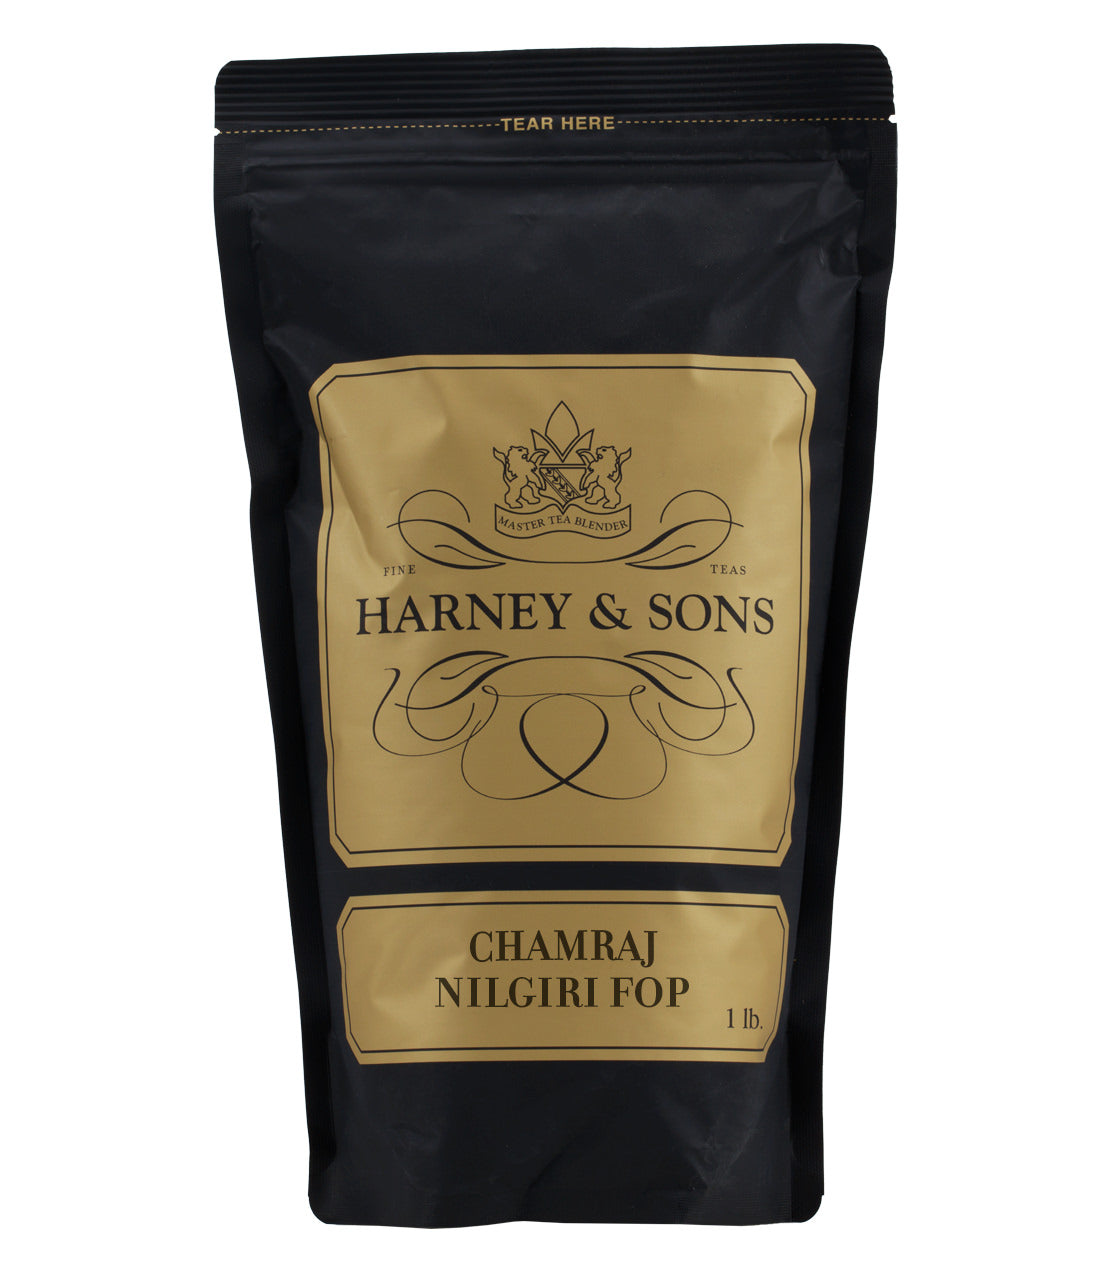 Chamraj Nilgiri FOP - Loose 1 lb. Bag - Harney & Sons Fine Teas